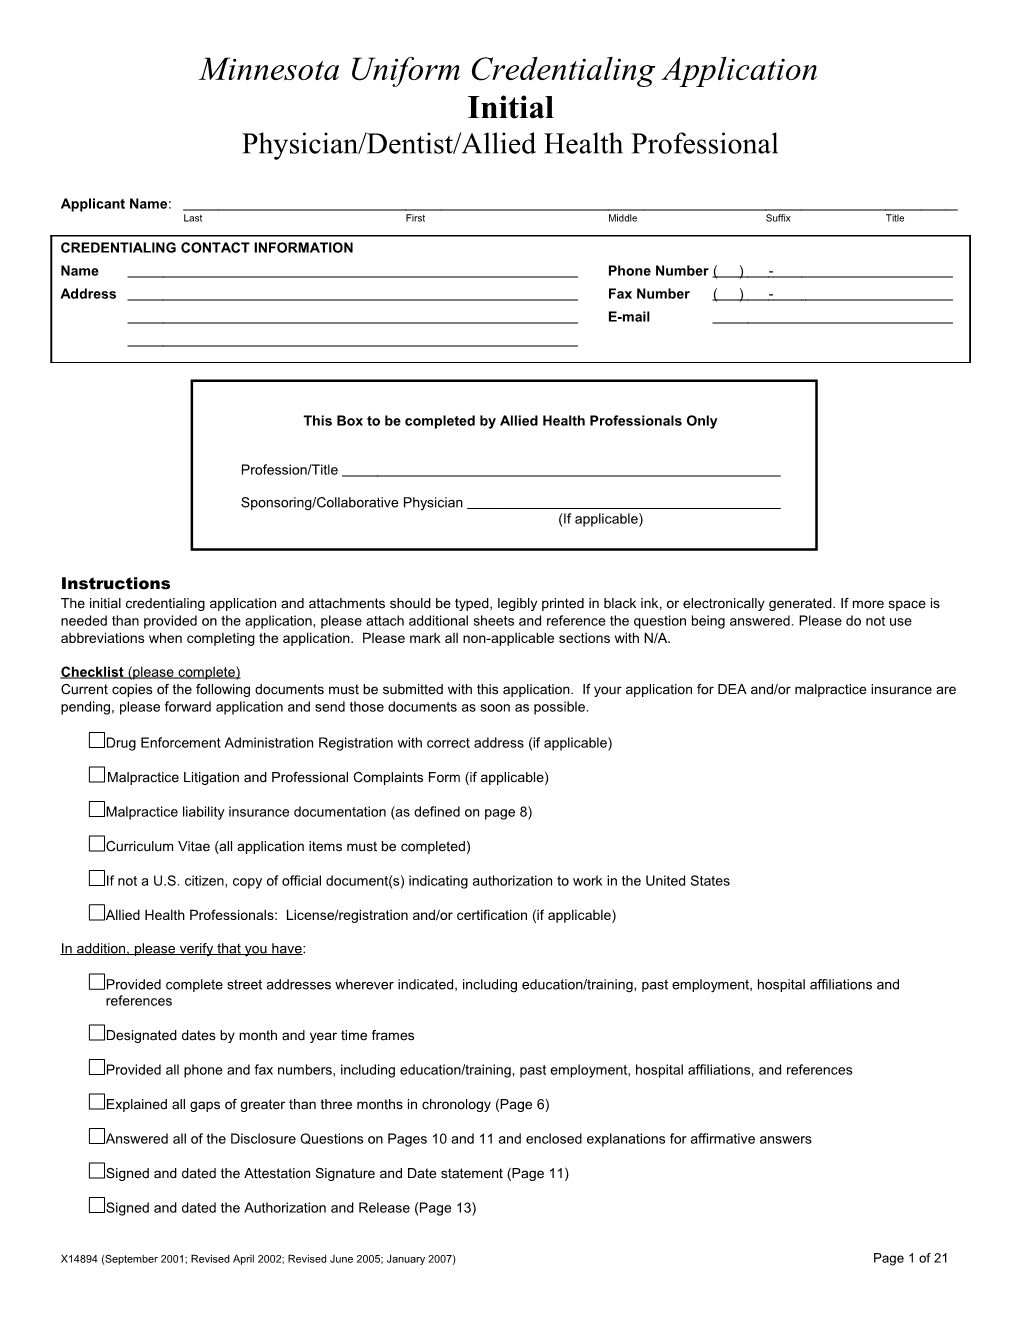 Minnesota Uniform Credentialing Application